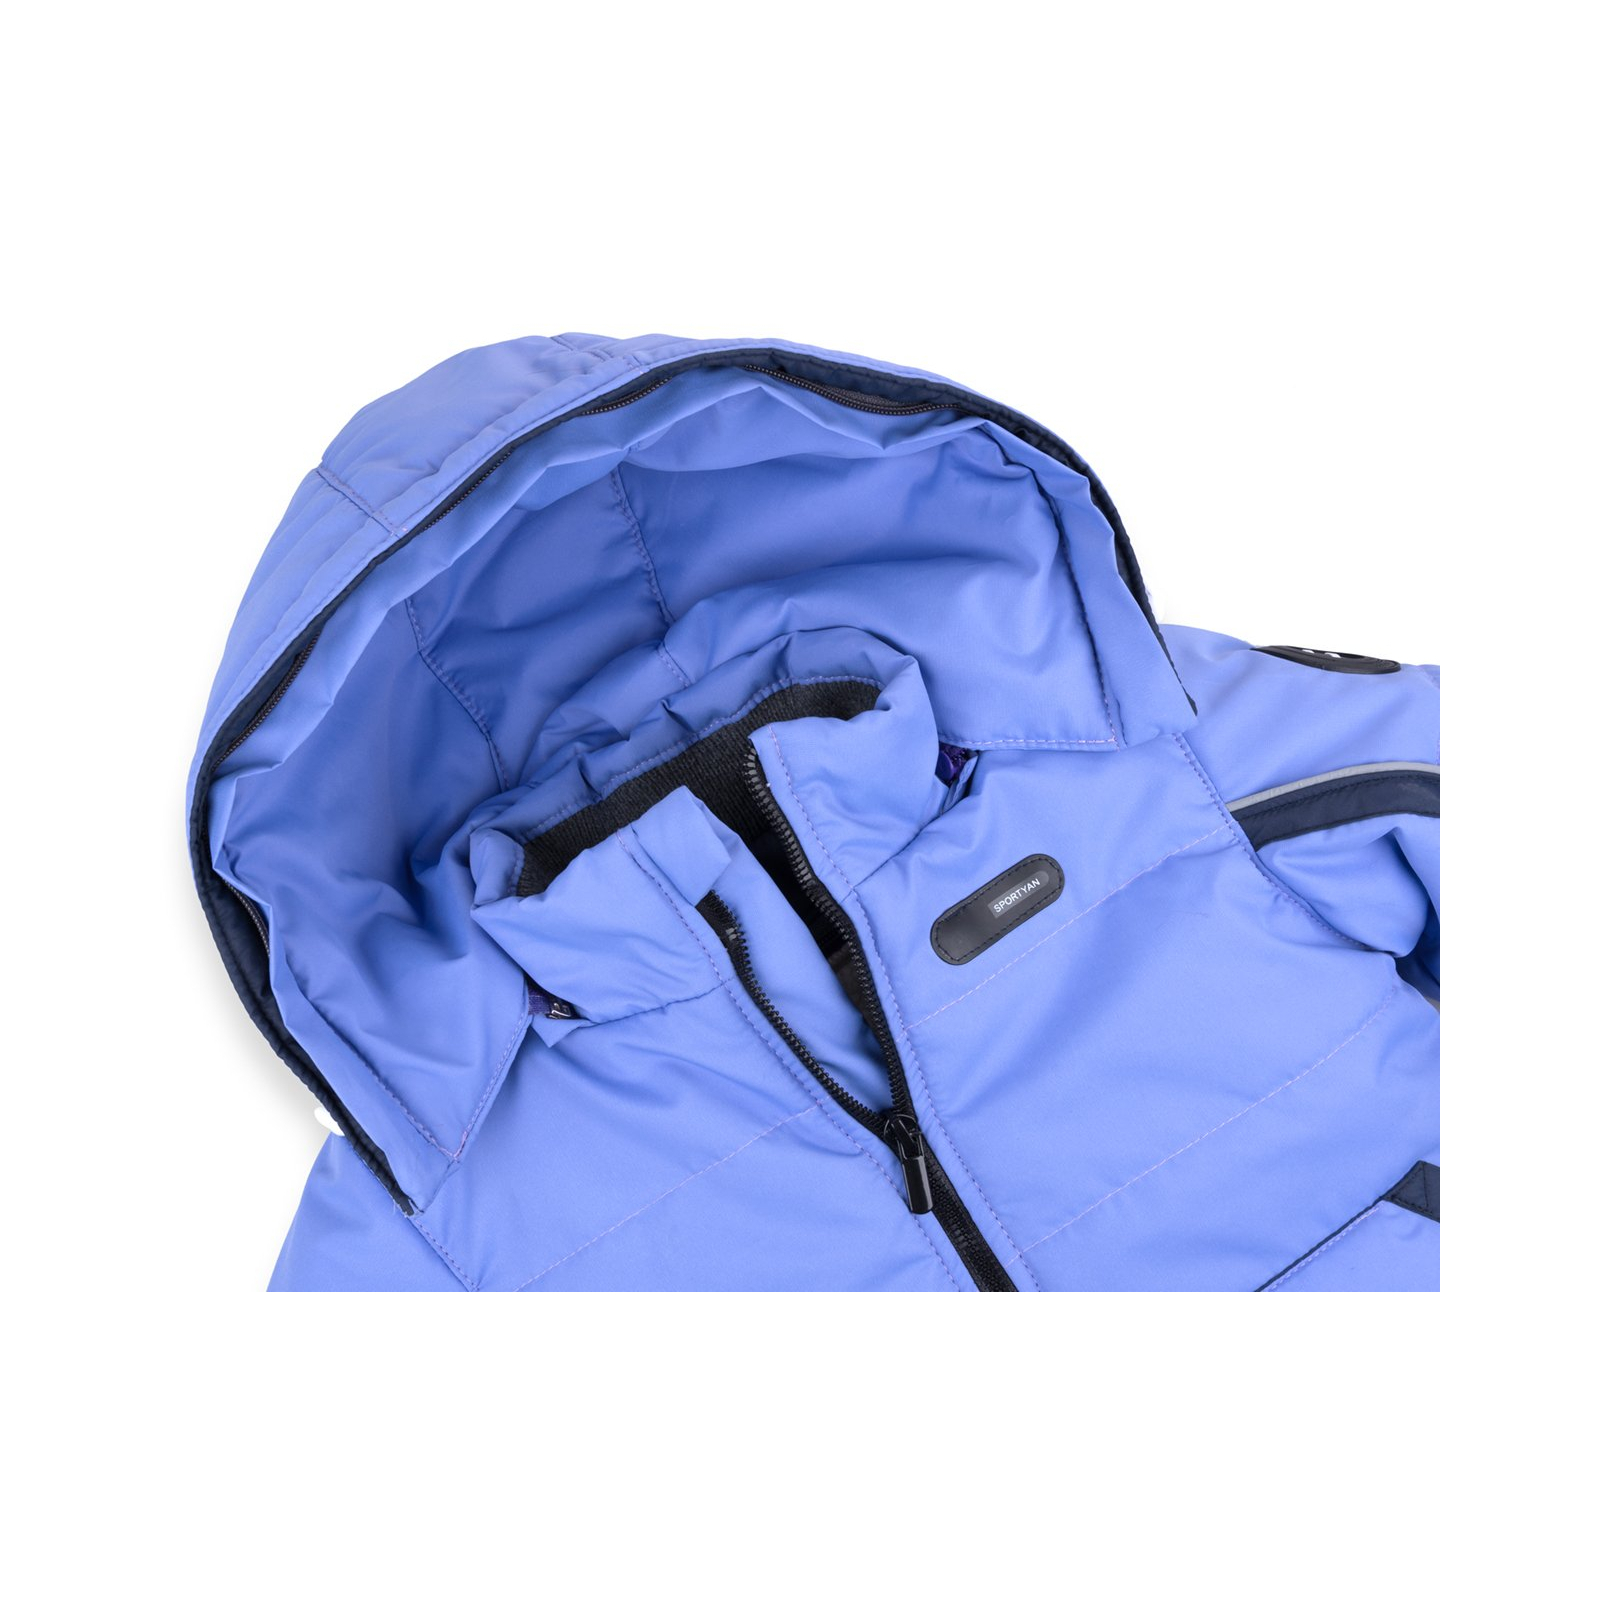 Комбинезон Интеркидс зимний со светоотражателями (5003-92B-blue) изображение 4